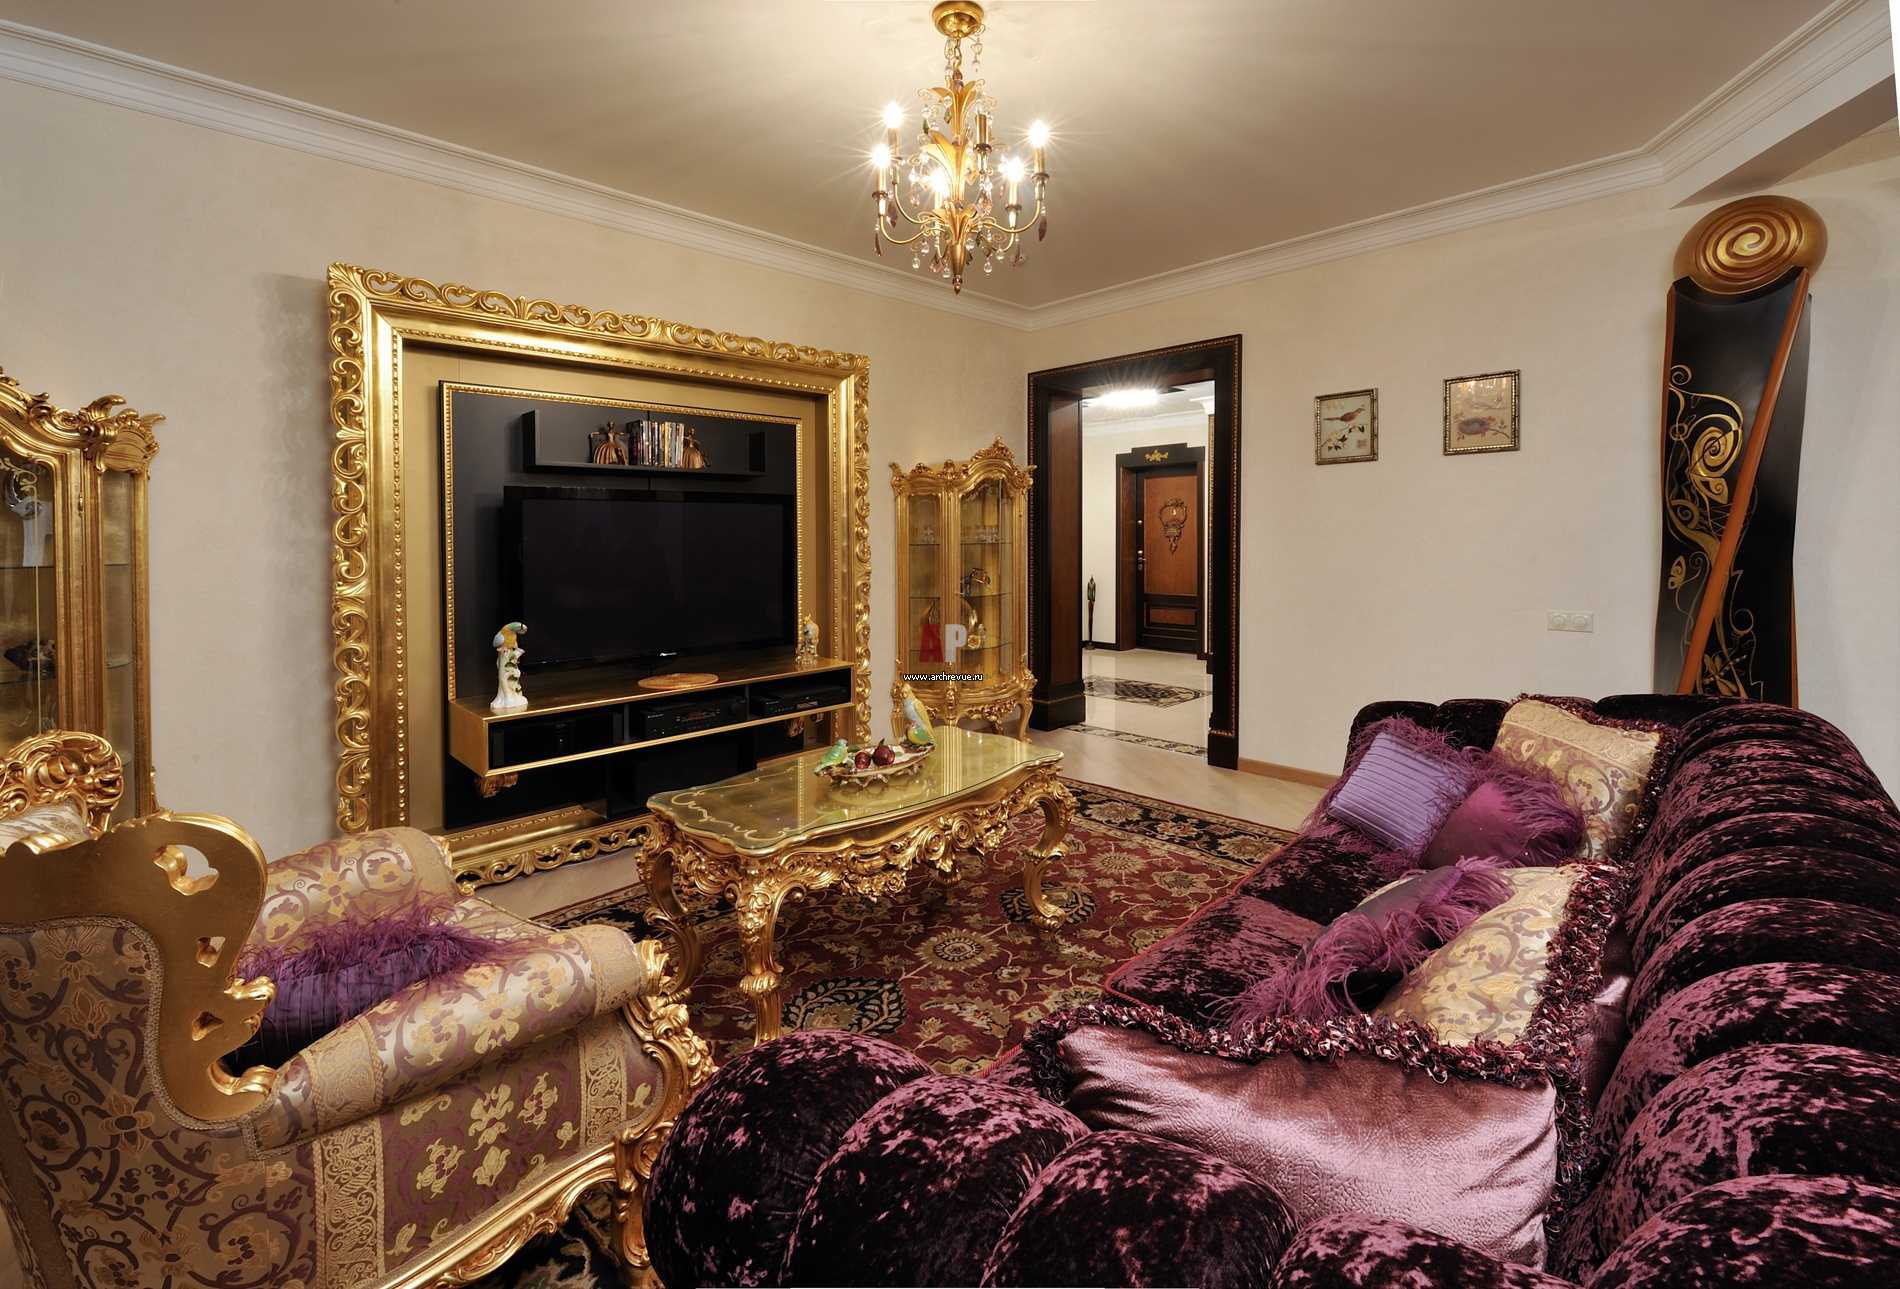 light bedroom decor in purple